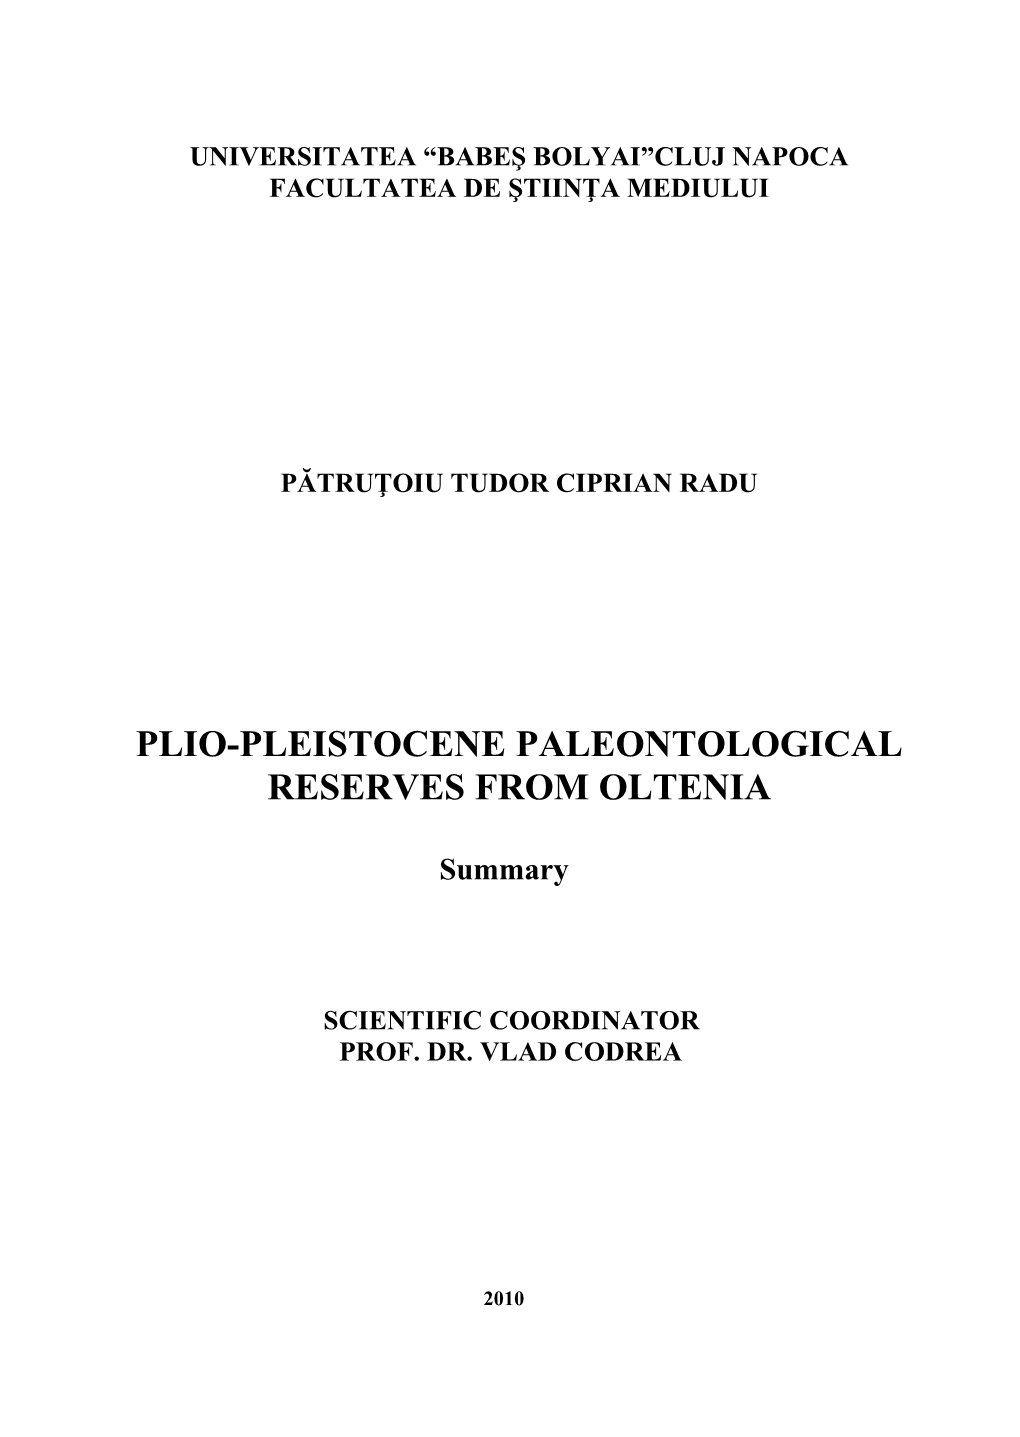 Plio-Pleistocene Paleontological Reserves from Oltenia